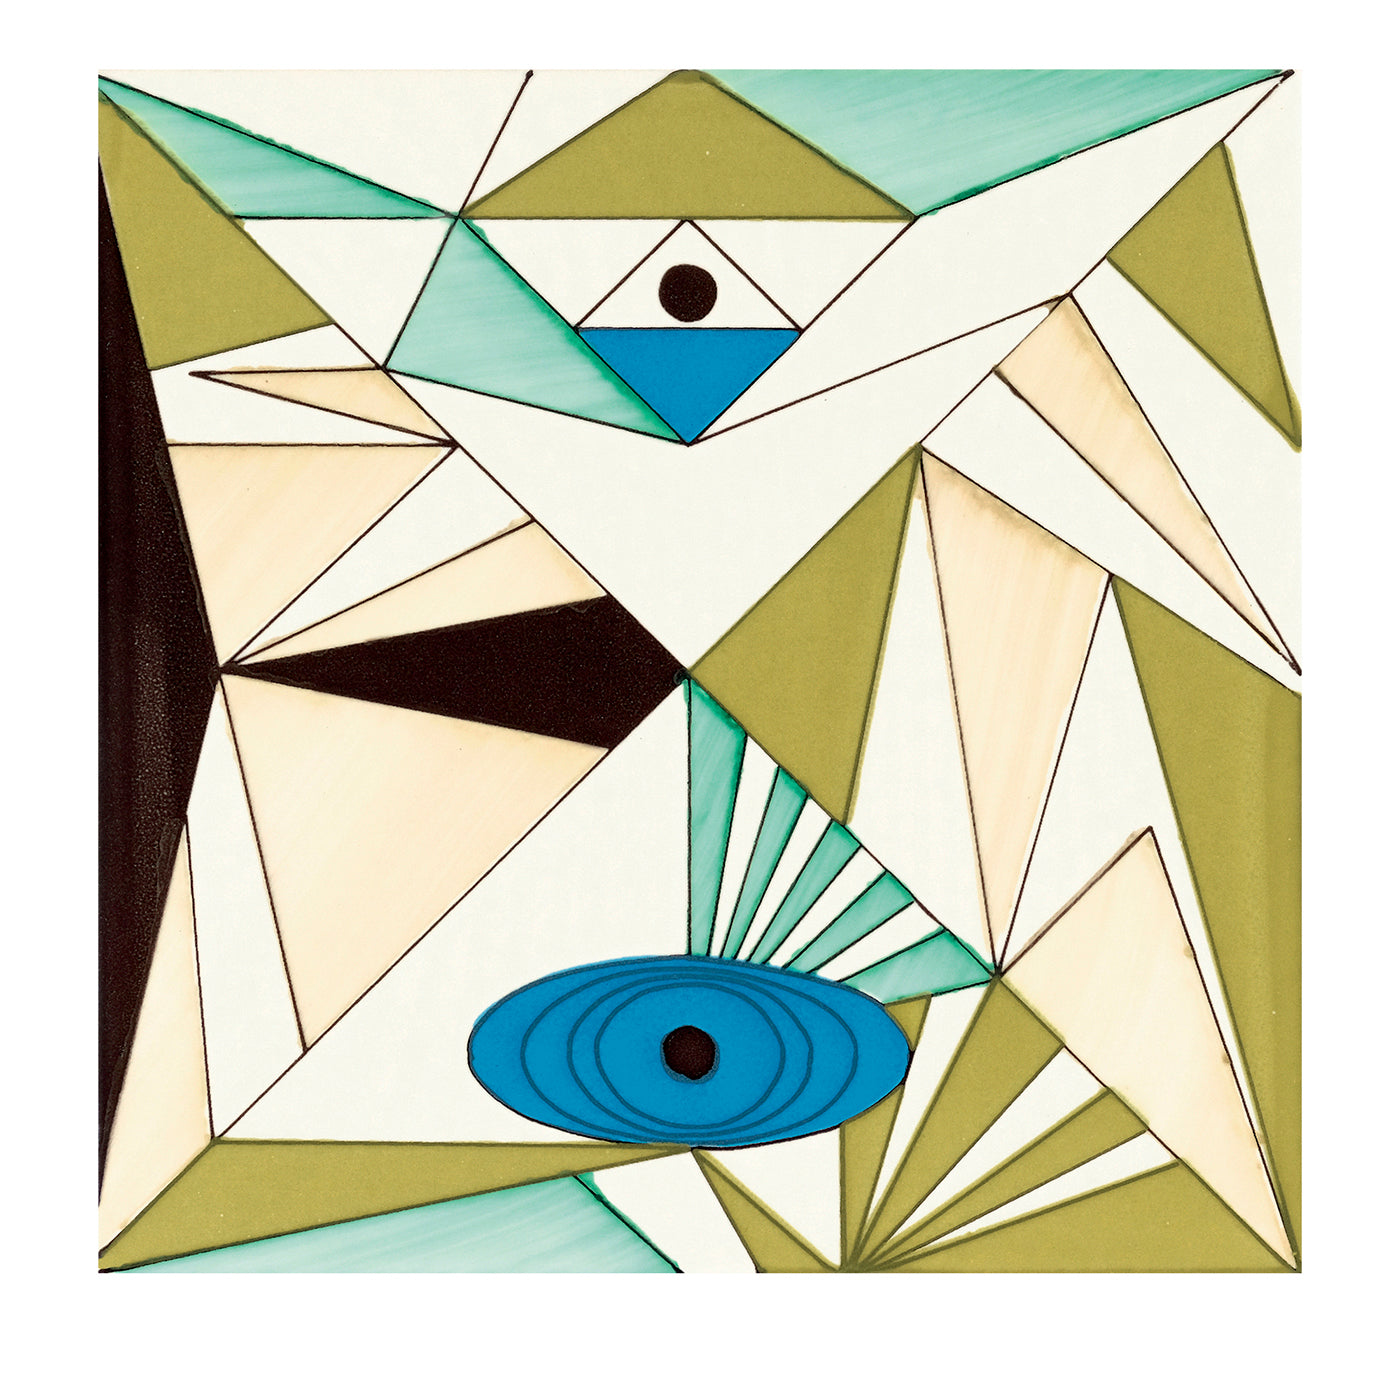 Set of 25 Geometric Face Tiles - Main view